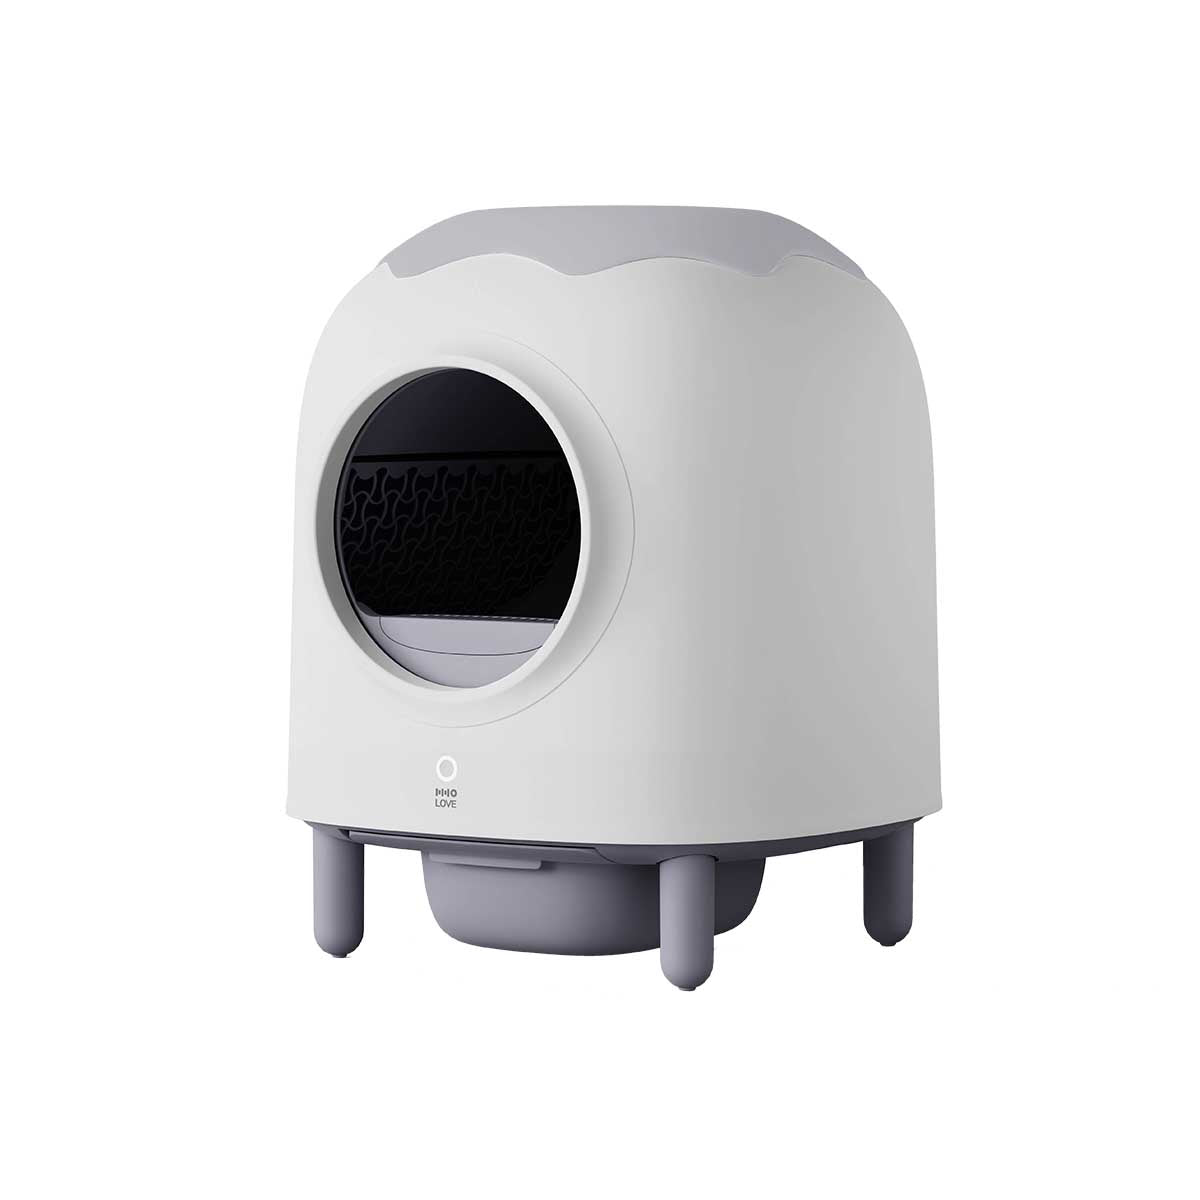 HHOLOVE iPet Smart Automatic Cat Litter Box 智能貓廁所